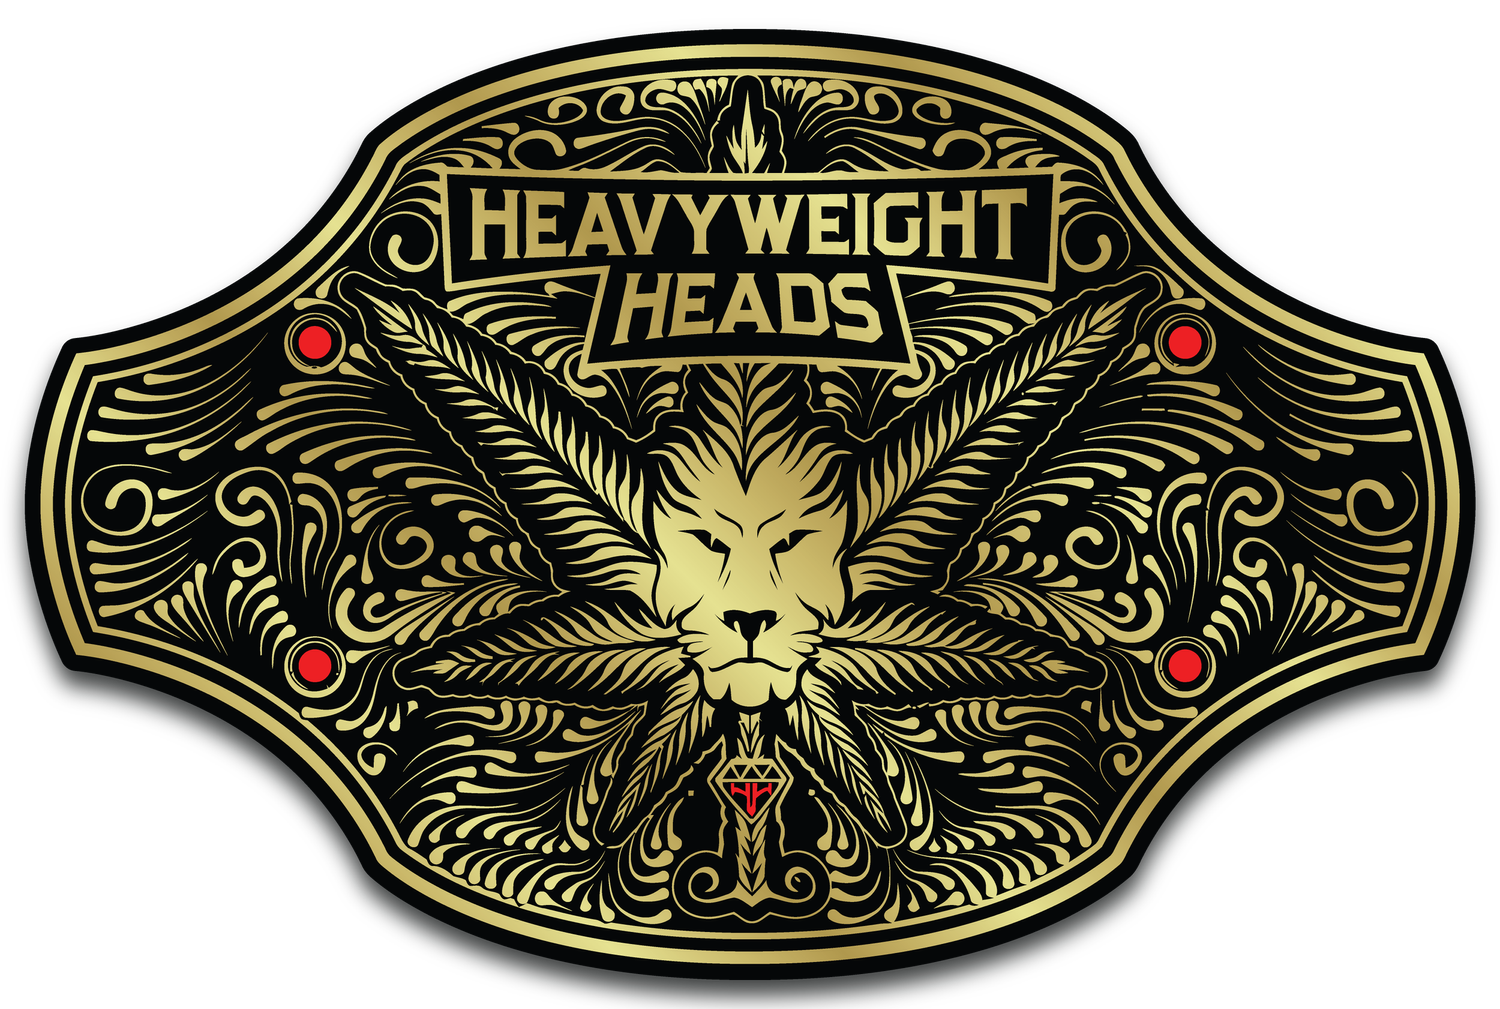 Heavyweight Heads